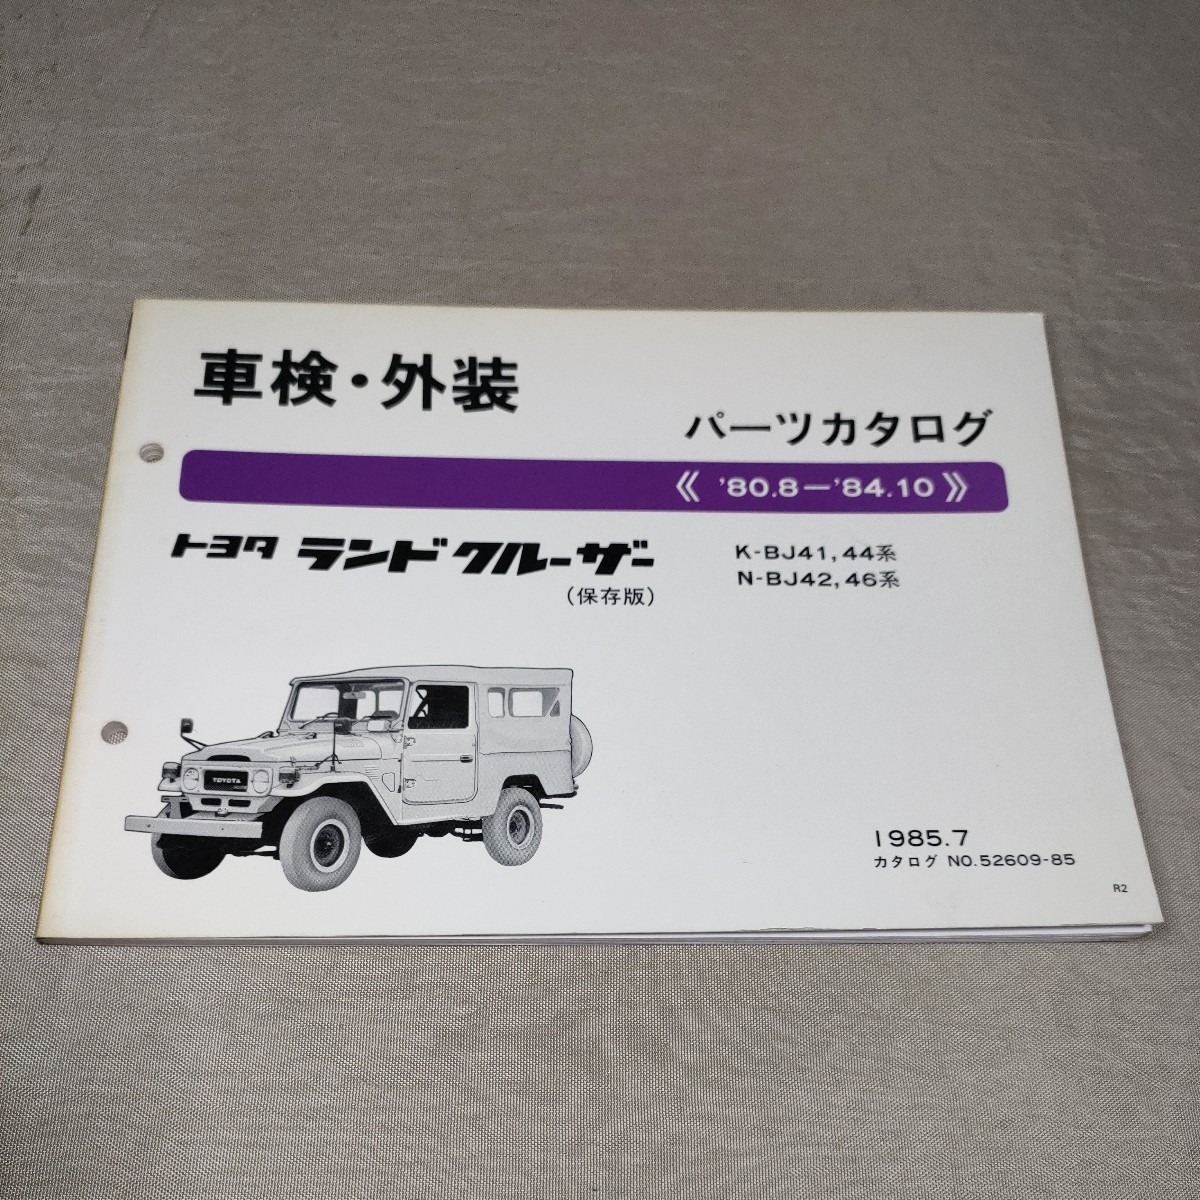  parts catalog Land Cruiser /BJ41/44/BJ42/46 1985.7 preservation version 